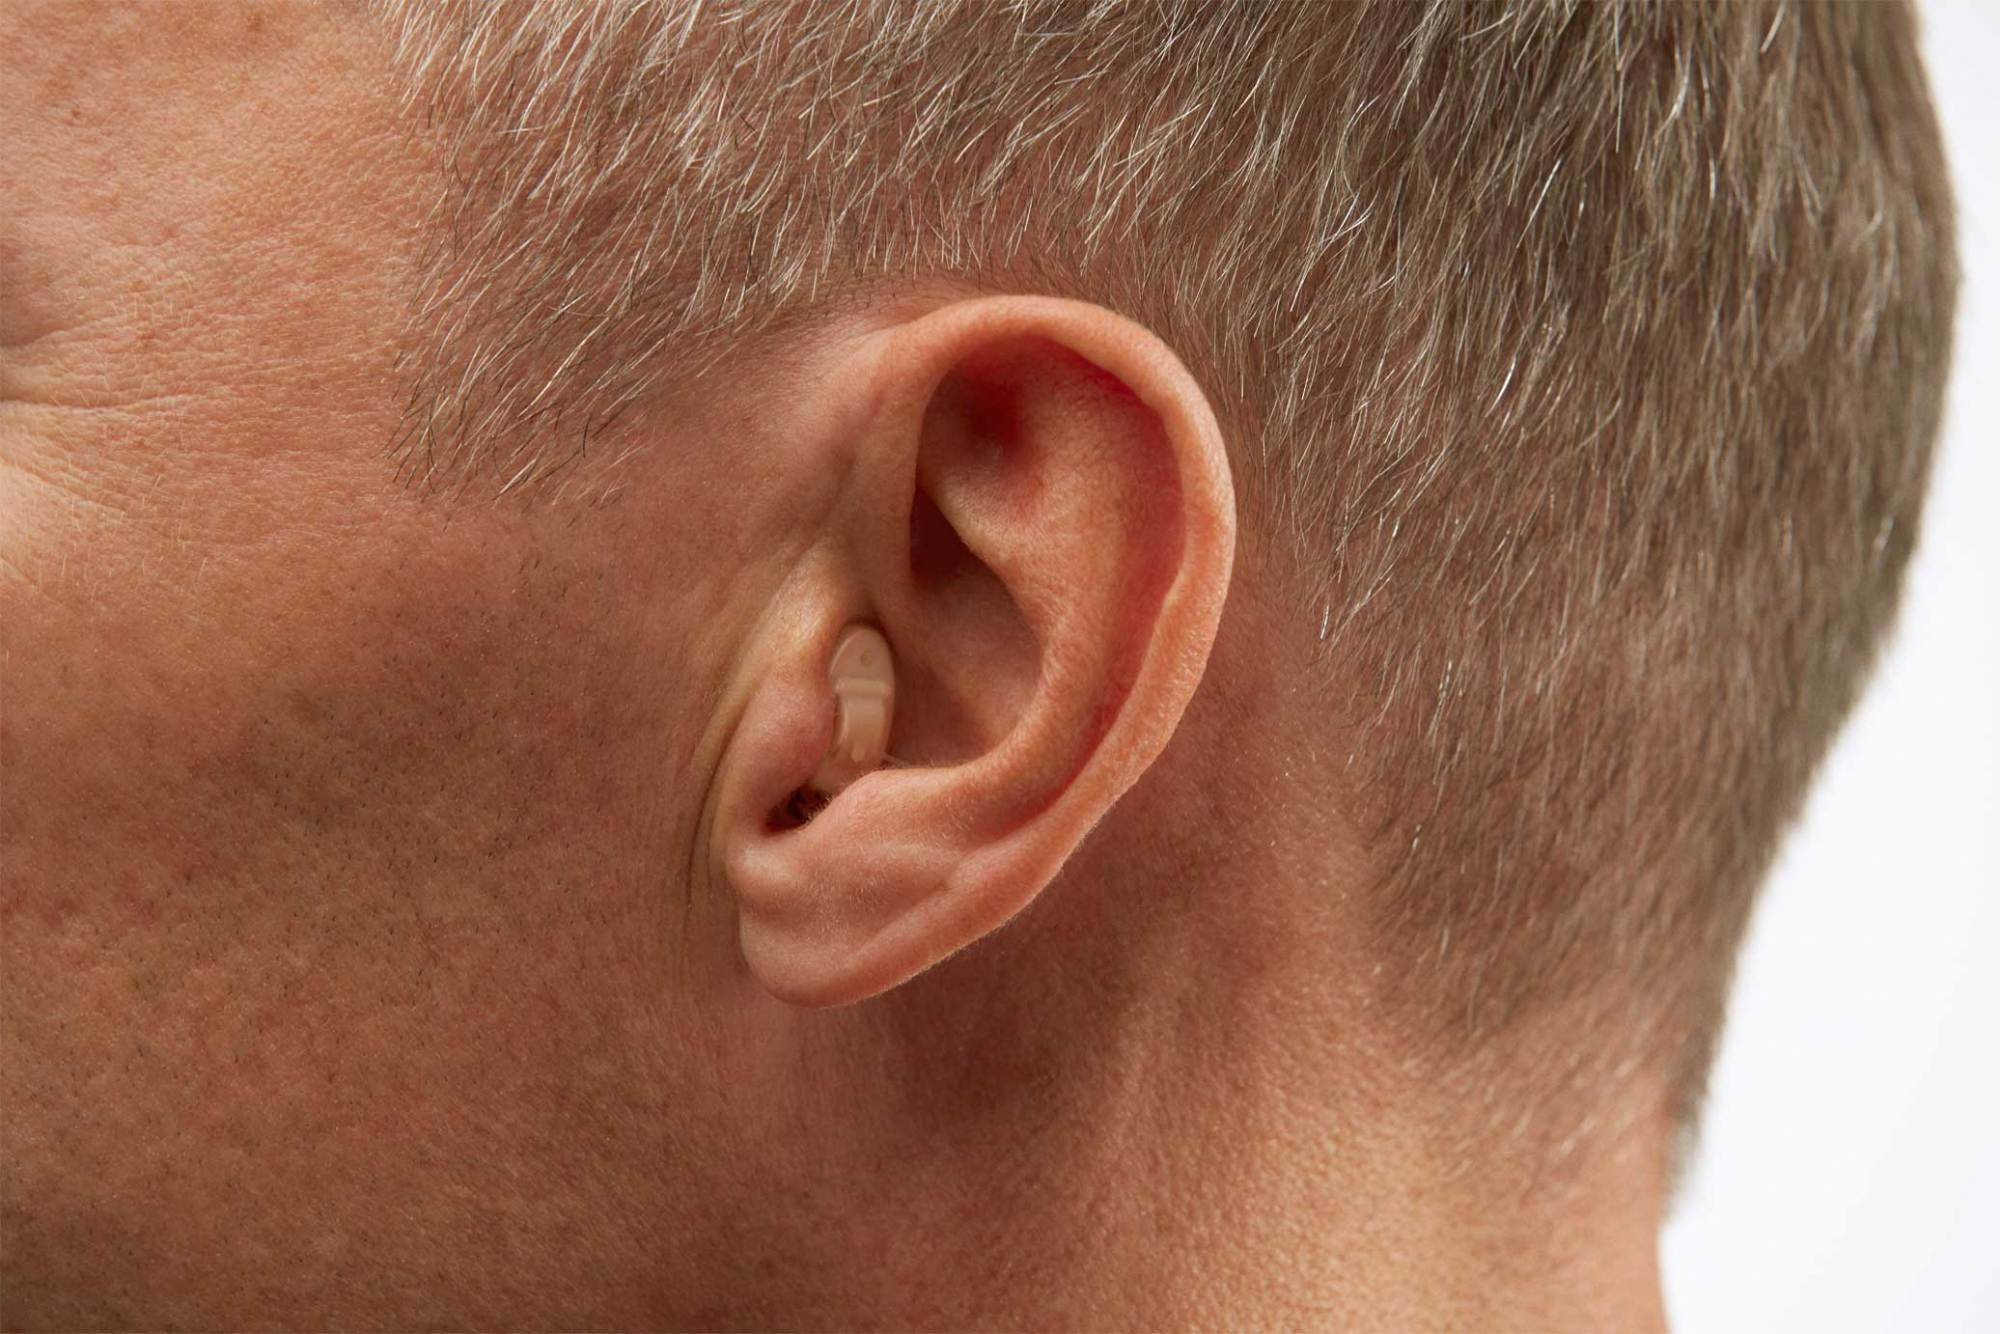 Ear hearing. Слуховой аппарат. Заушный слуховой аппарат на ухе.